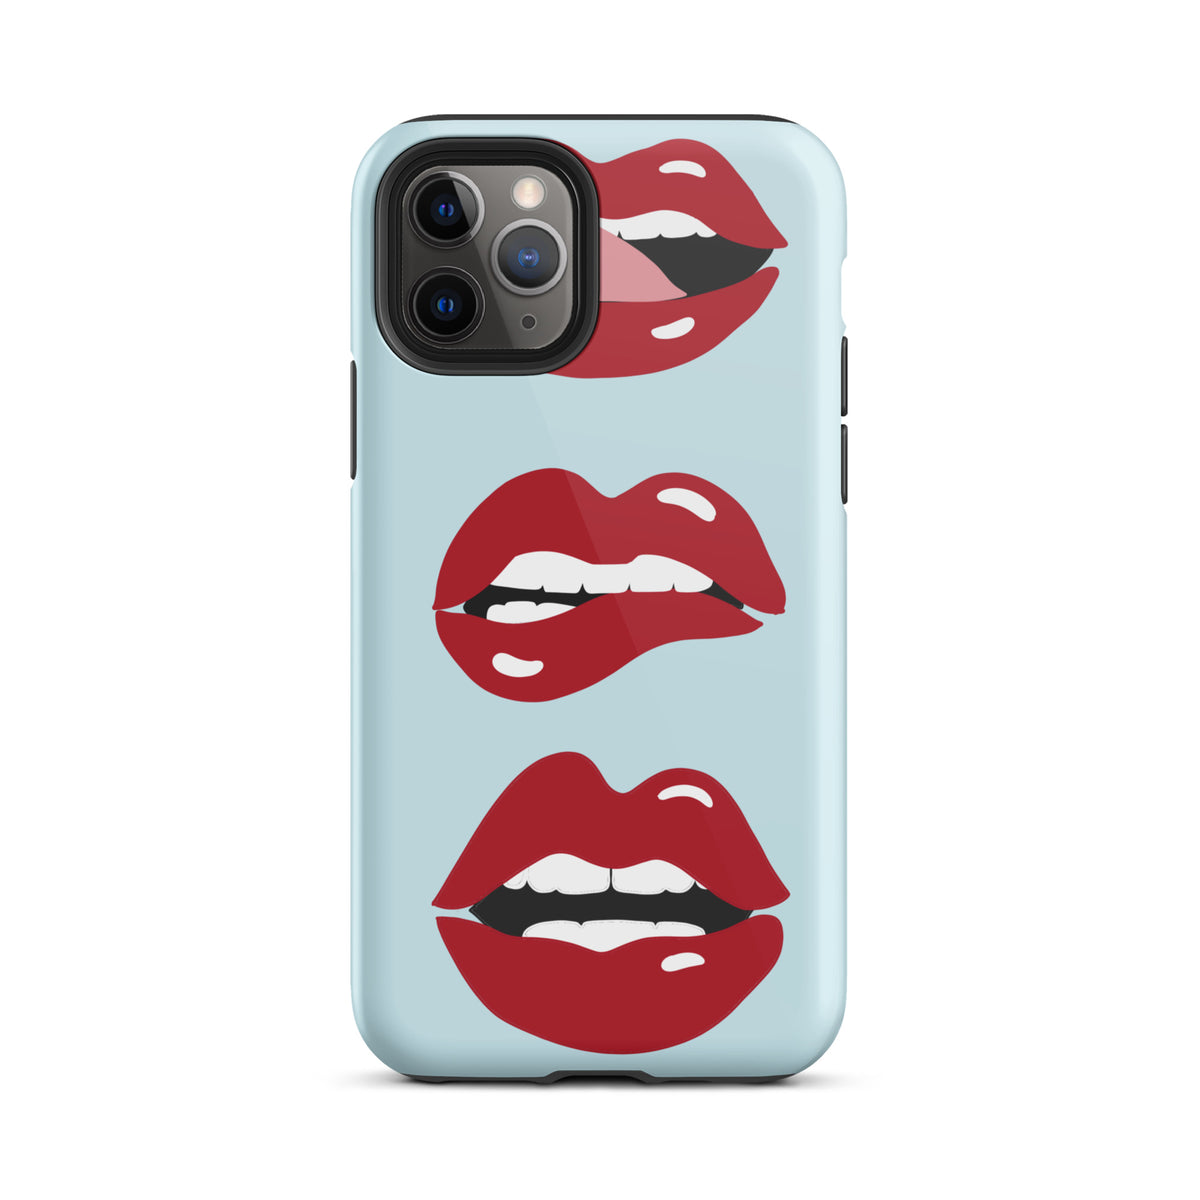 Lipstick iphone case